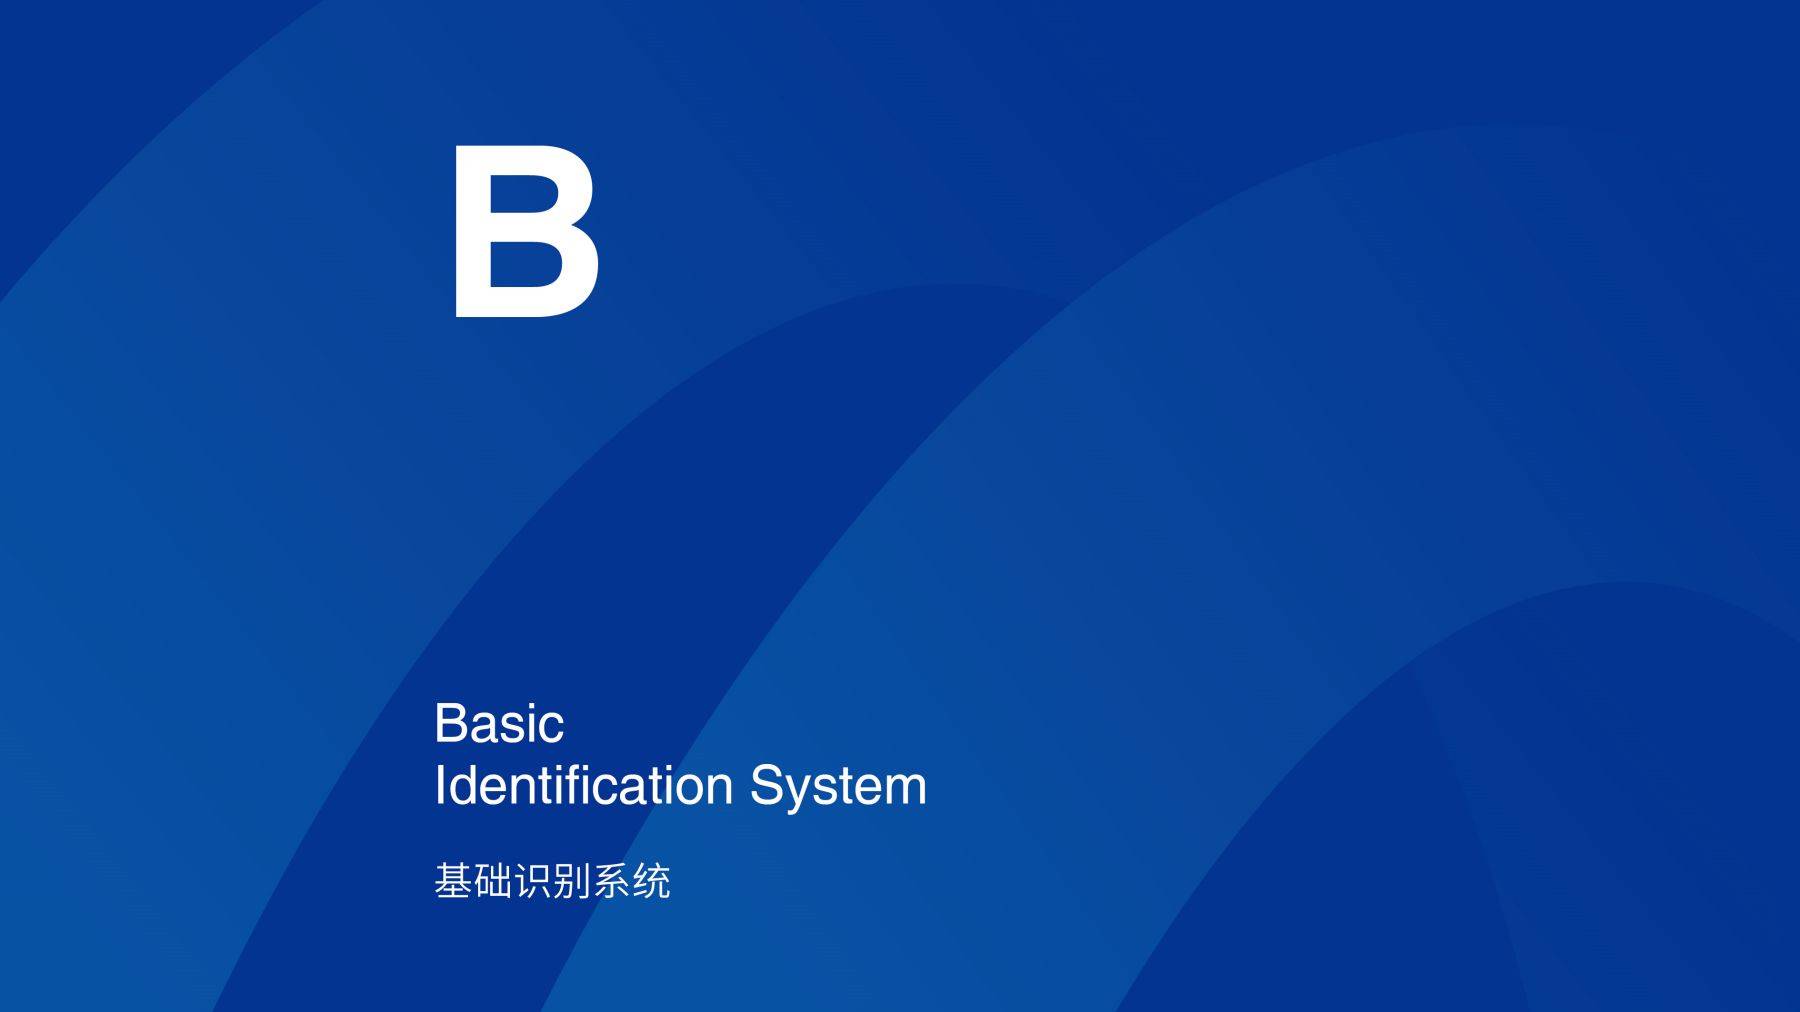 B1-办公应用识别系统_画板 1.jpg